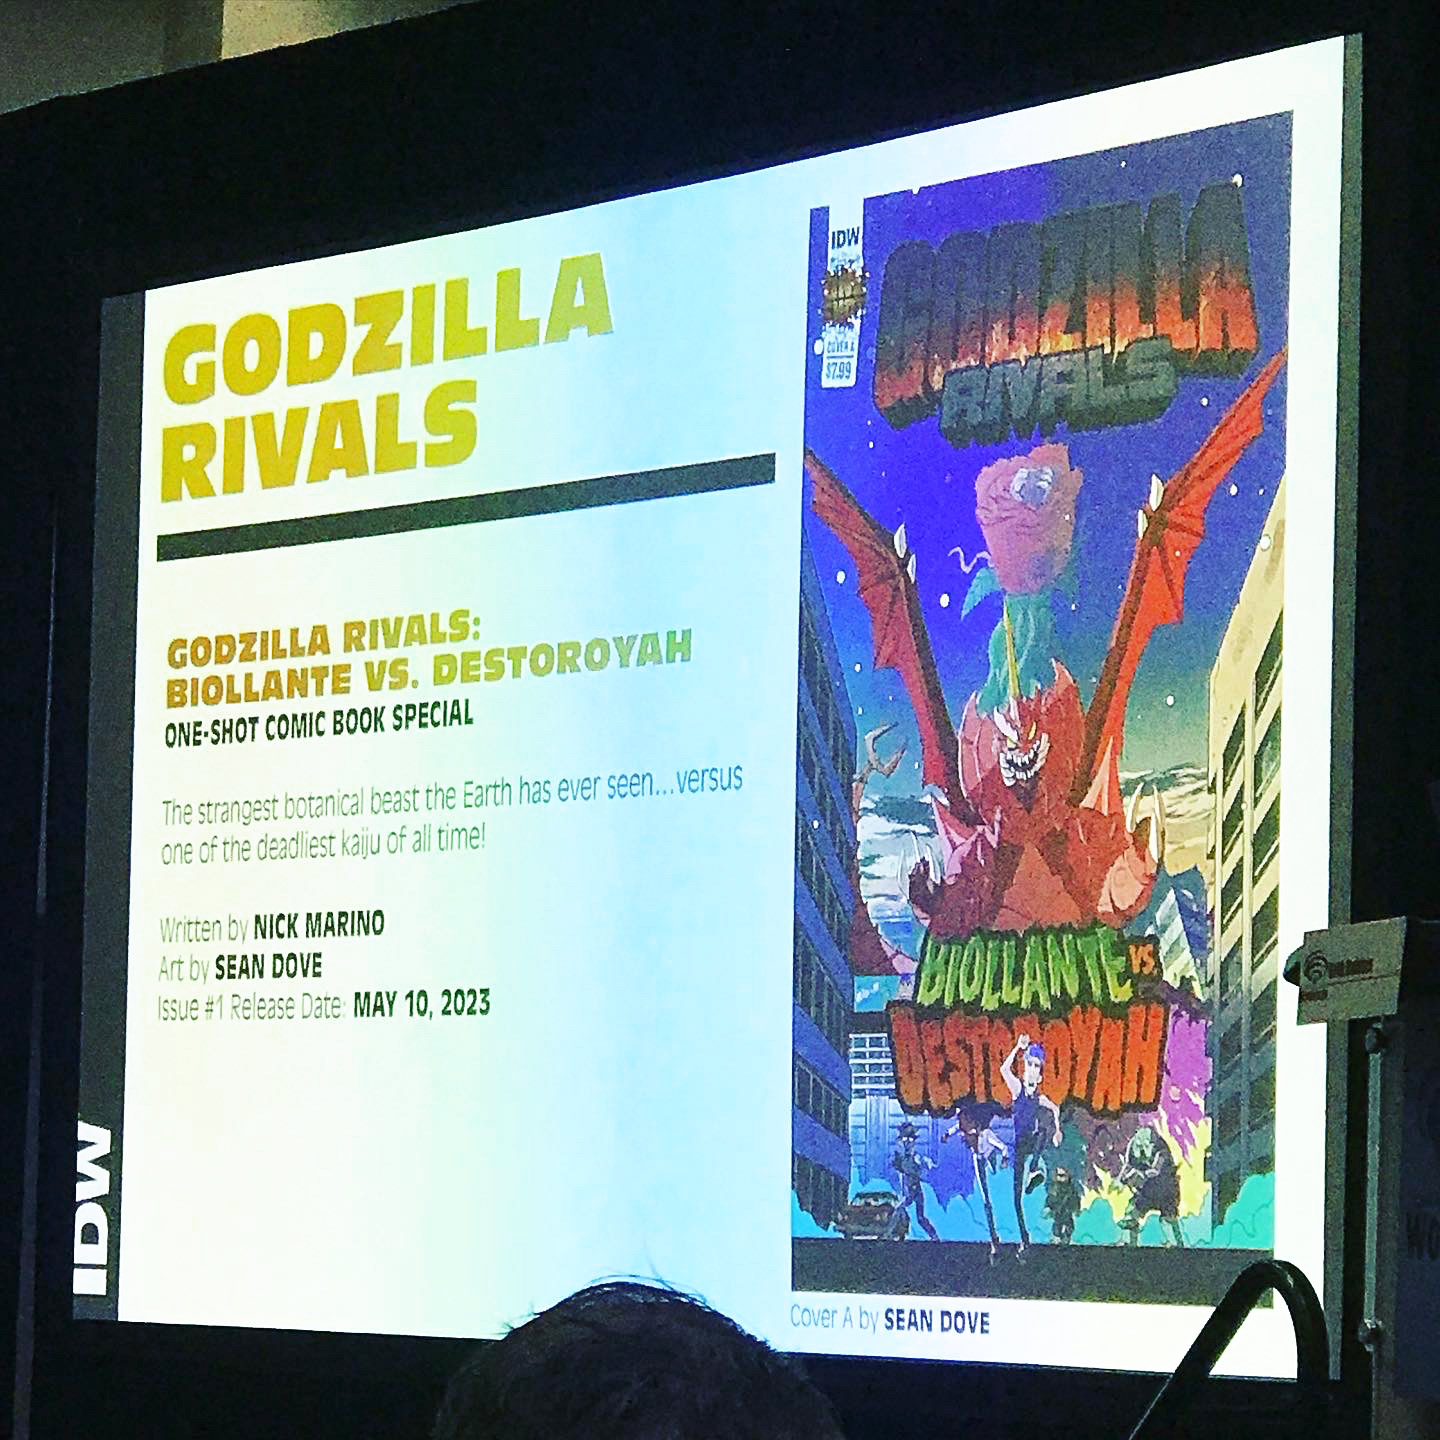 Godzilla Rivals: Biollante Vs. Destoroyah, WonderCon 2023